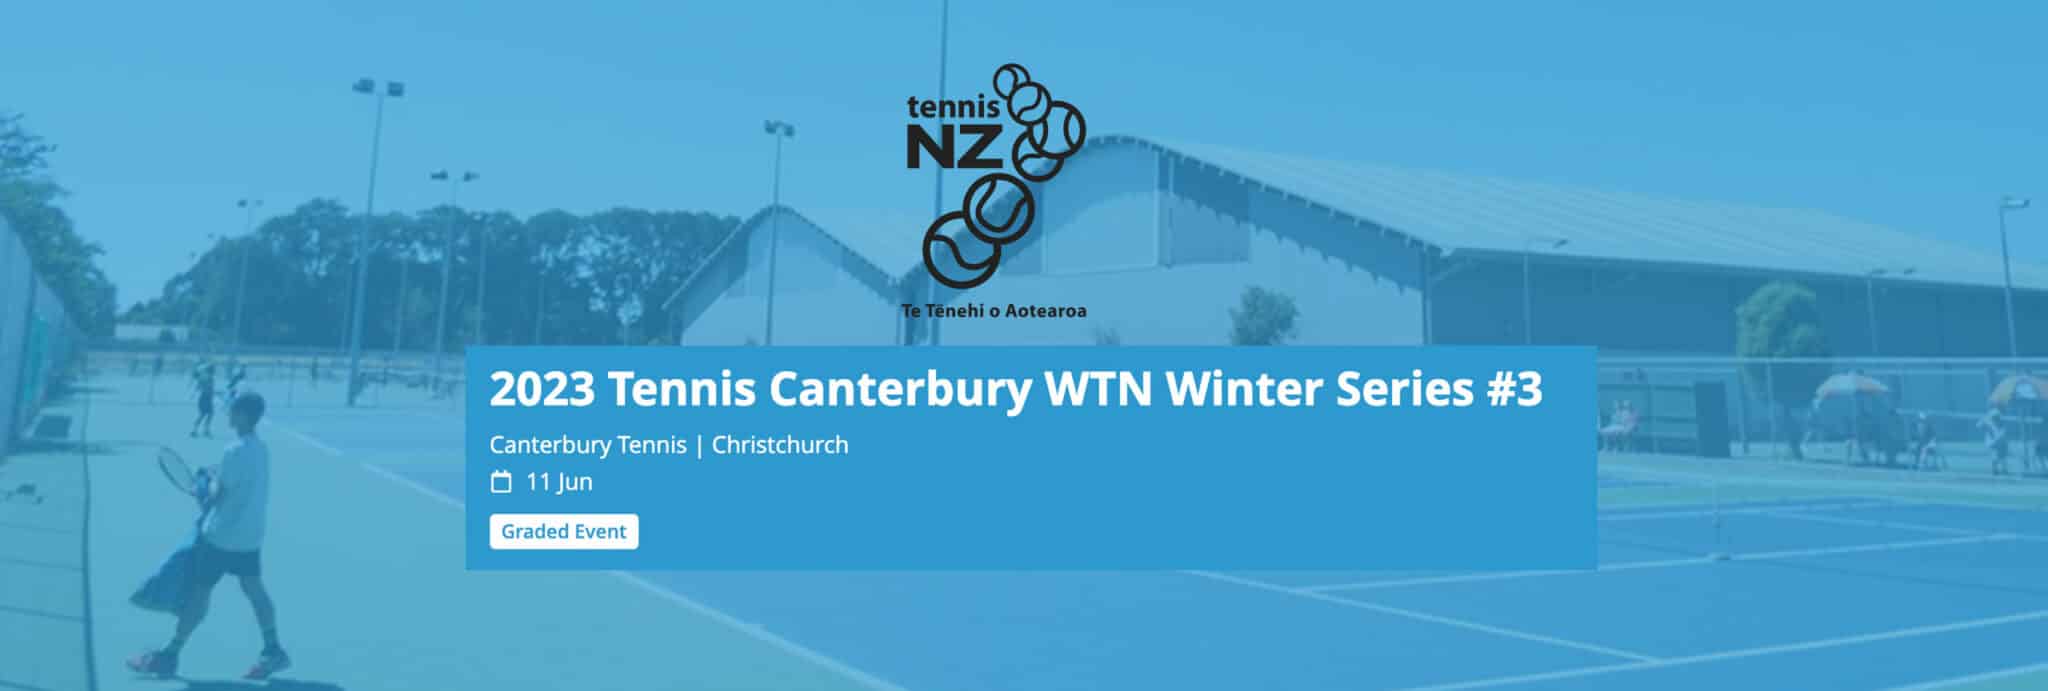 2023 Tennis Canterbury WTN Winter Series #3